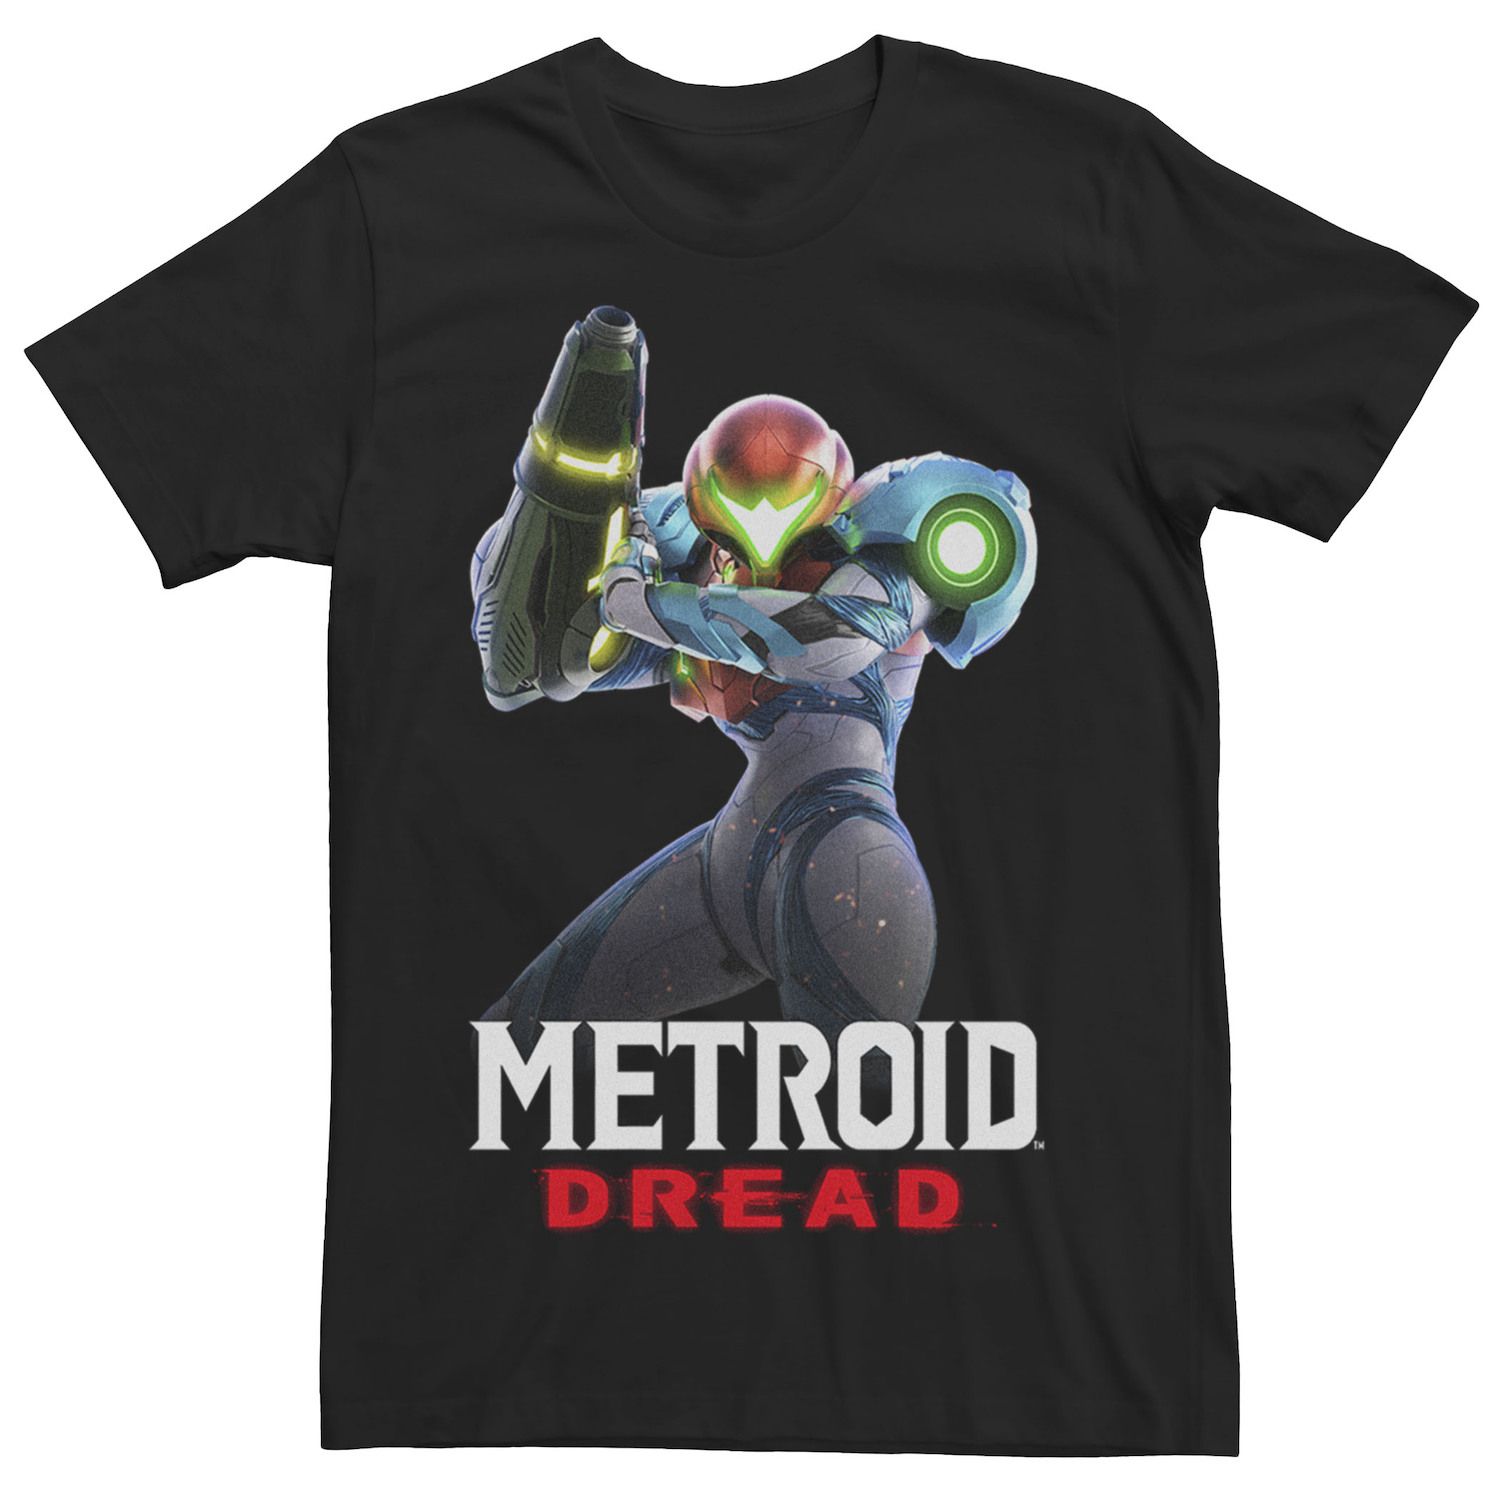 Мужская футболка с плакатом Metroid Prime Dread Battle Pose Licensed Character swtich amiibo карта galaxy warrior связь sahms emmi metroid dread